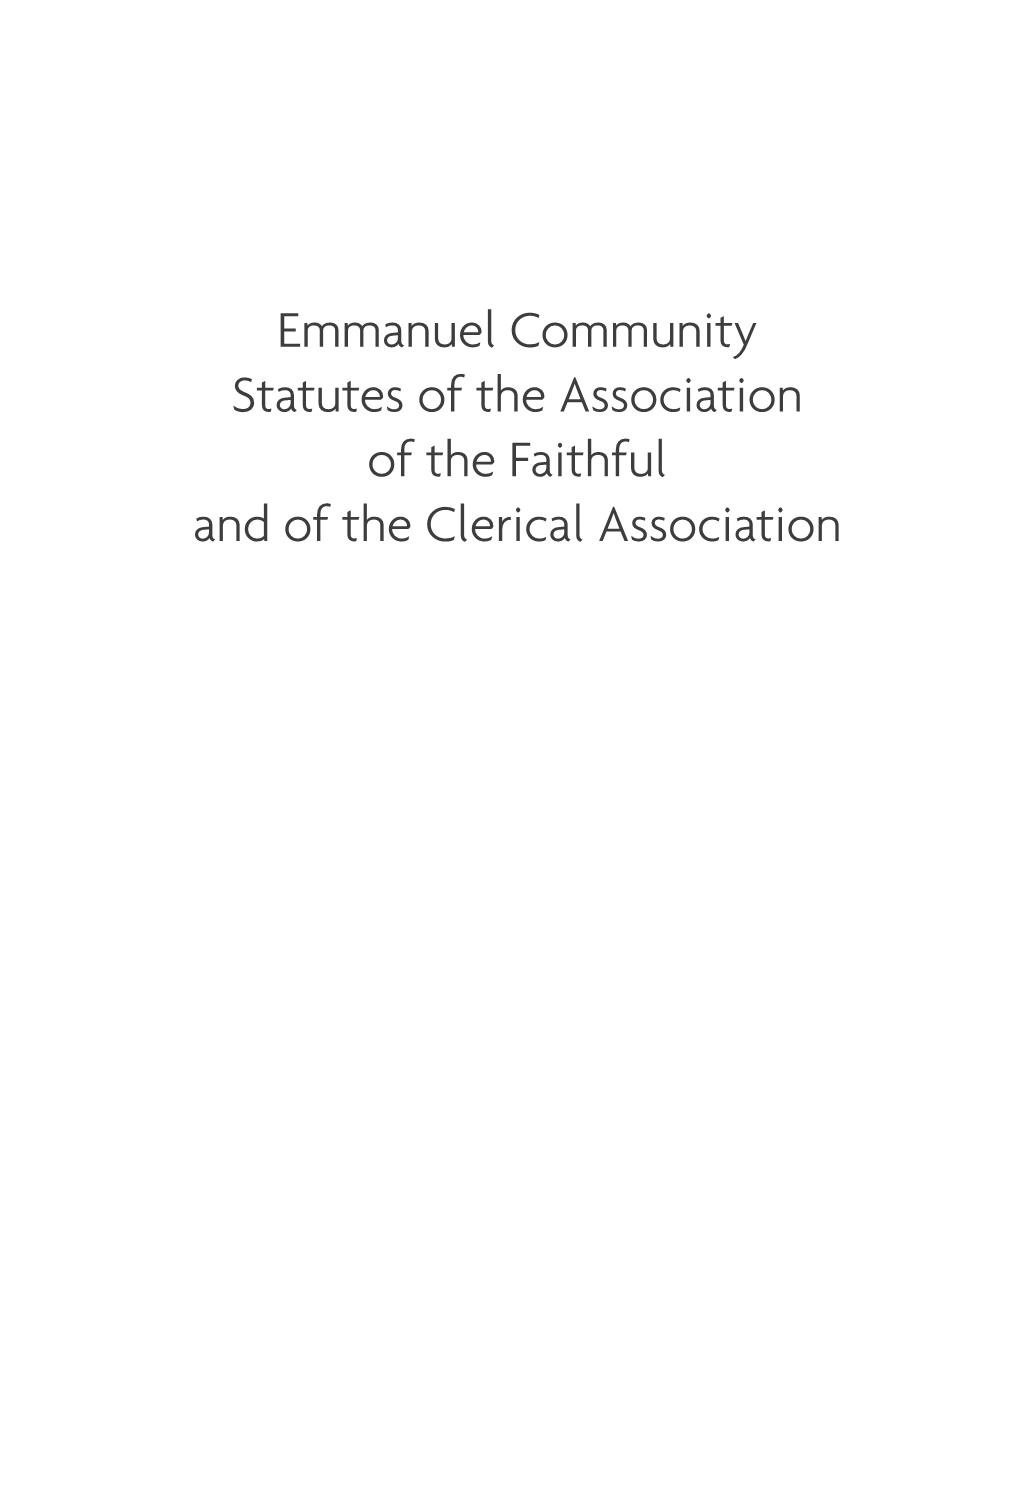 Emmanuel Community Statutes of the Association of the Faithful and of the Clerical Association